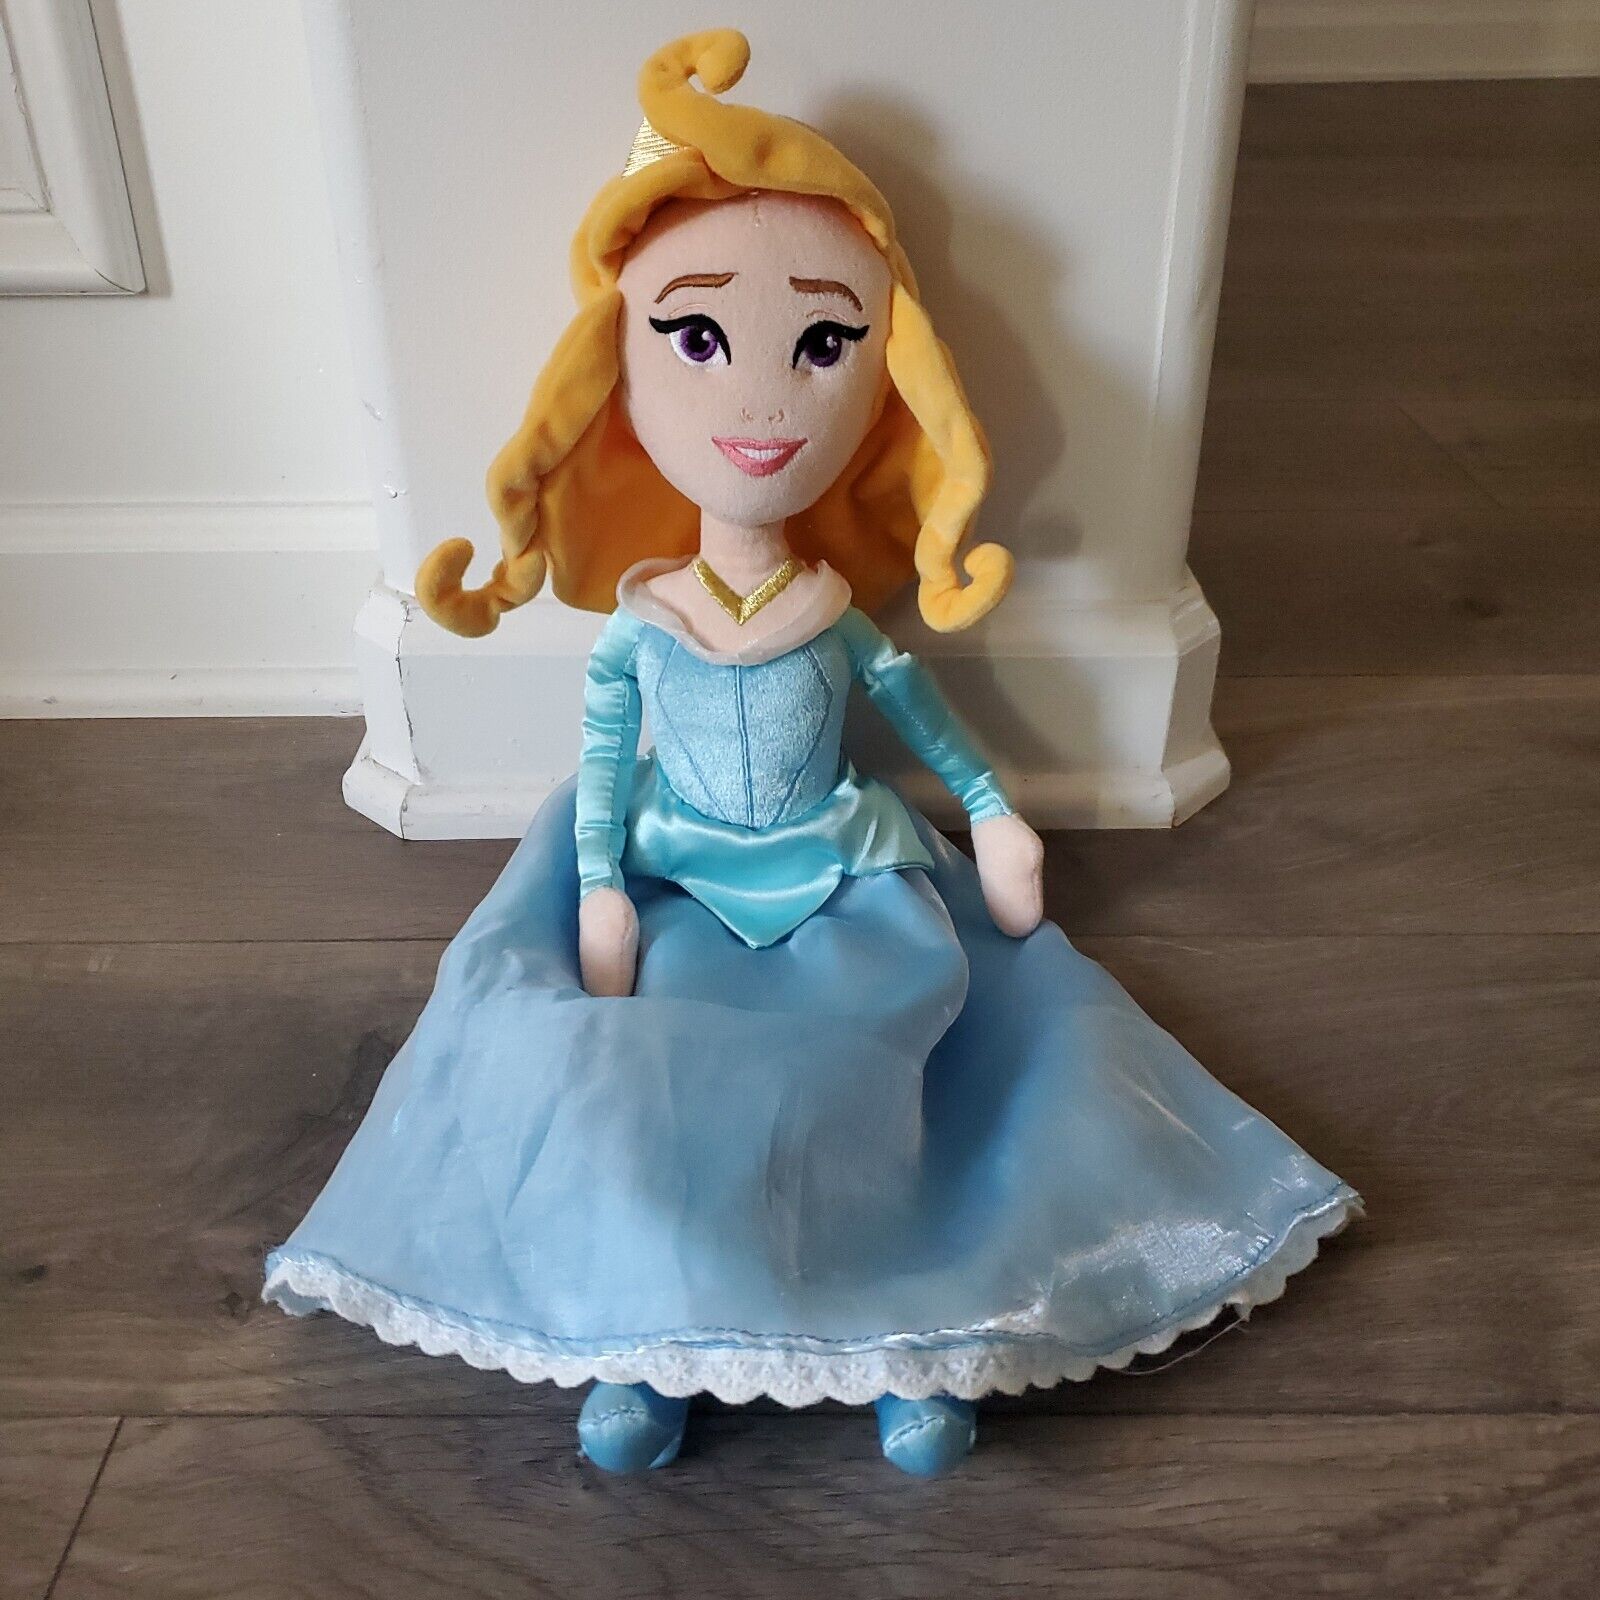 Disney Store Sleeping Beauty 19” Aurora Blue Dress Plush Doll 60th Anniversary